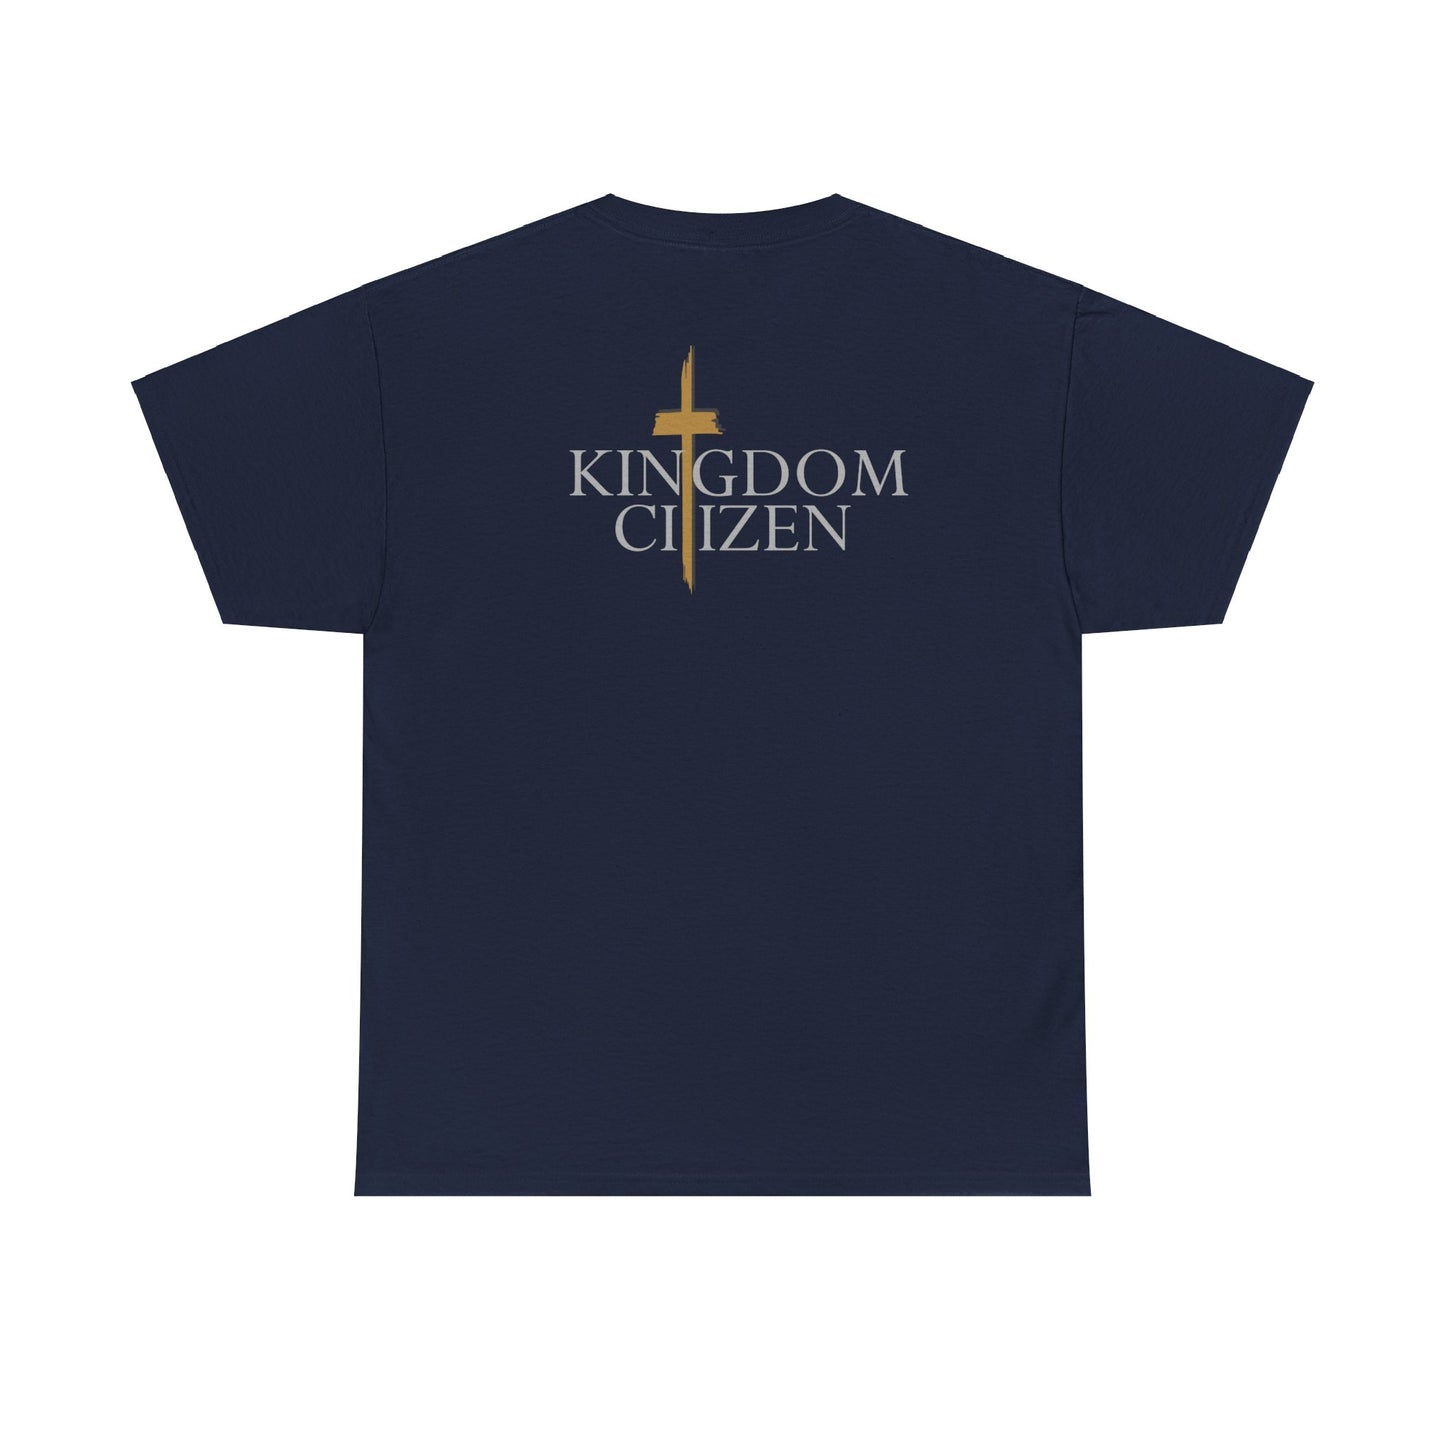 Thy Kingdom Come T-Shirt: A Prayerful Reminder